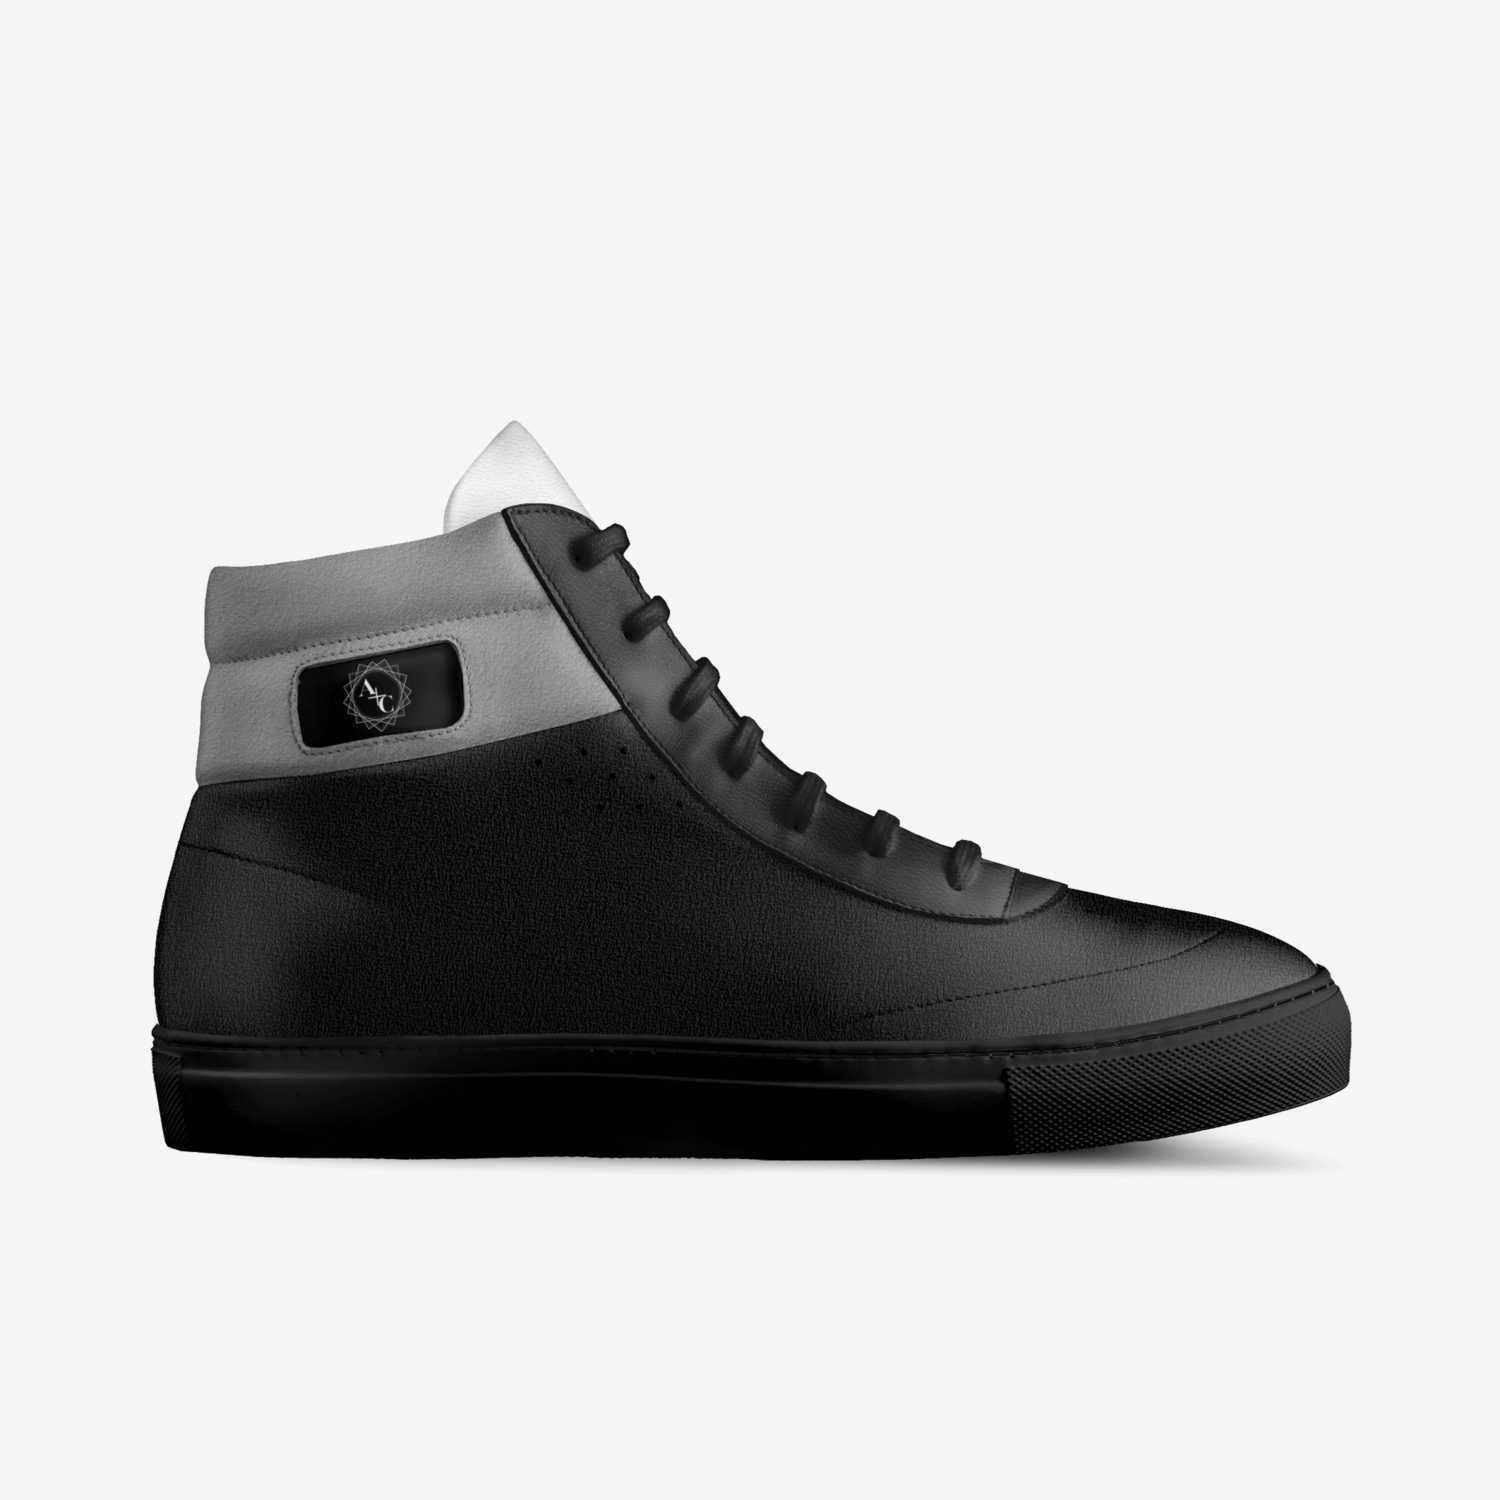 Runaways VL custom made in Italy shoes by Keneth Borjas | Side view